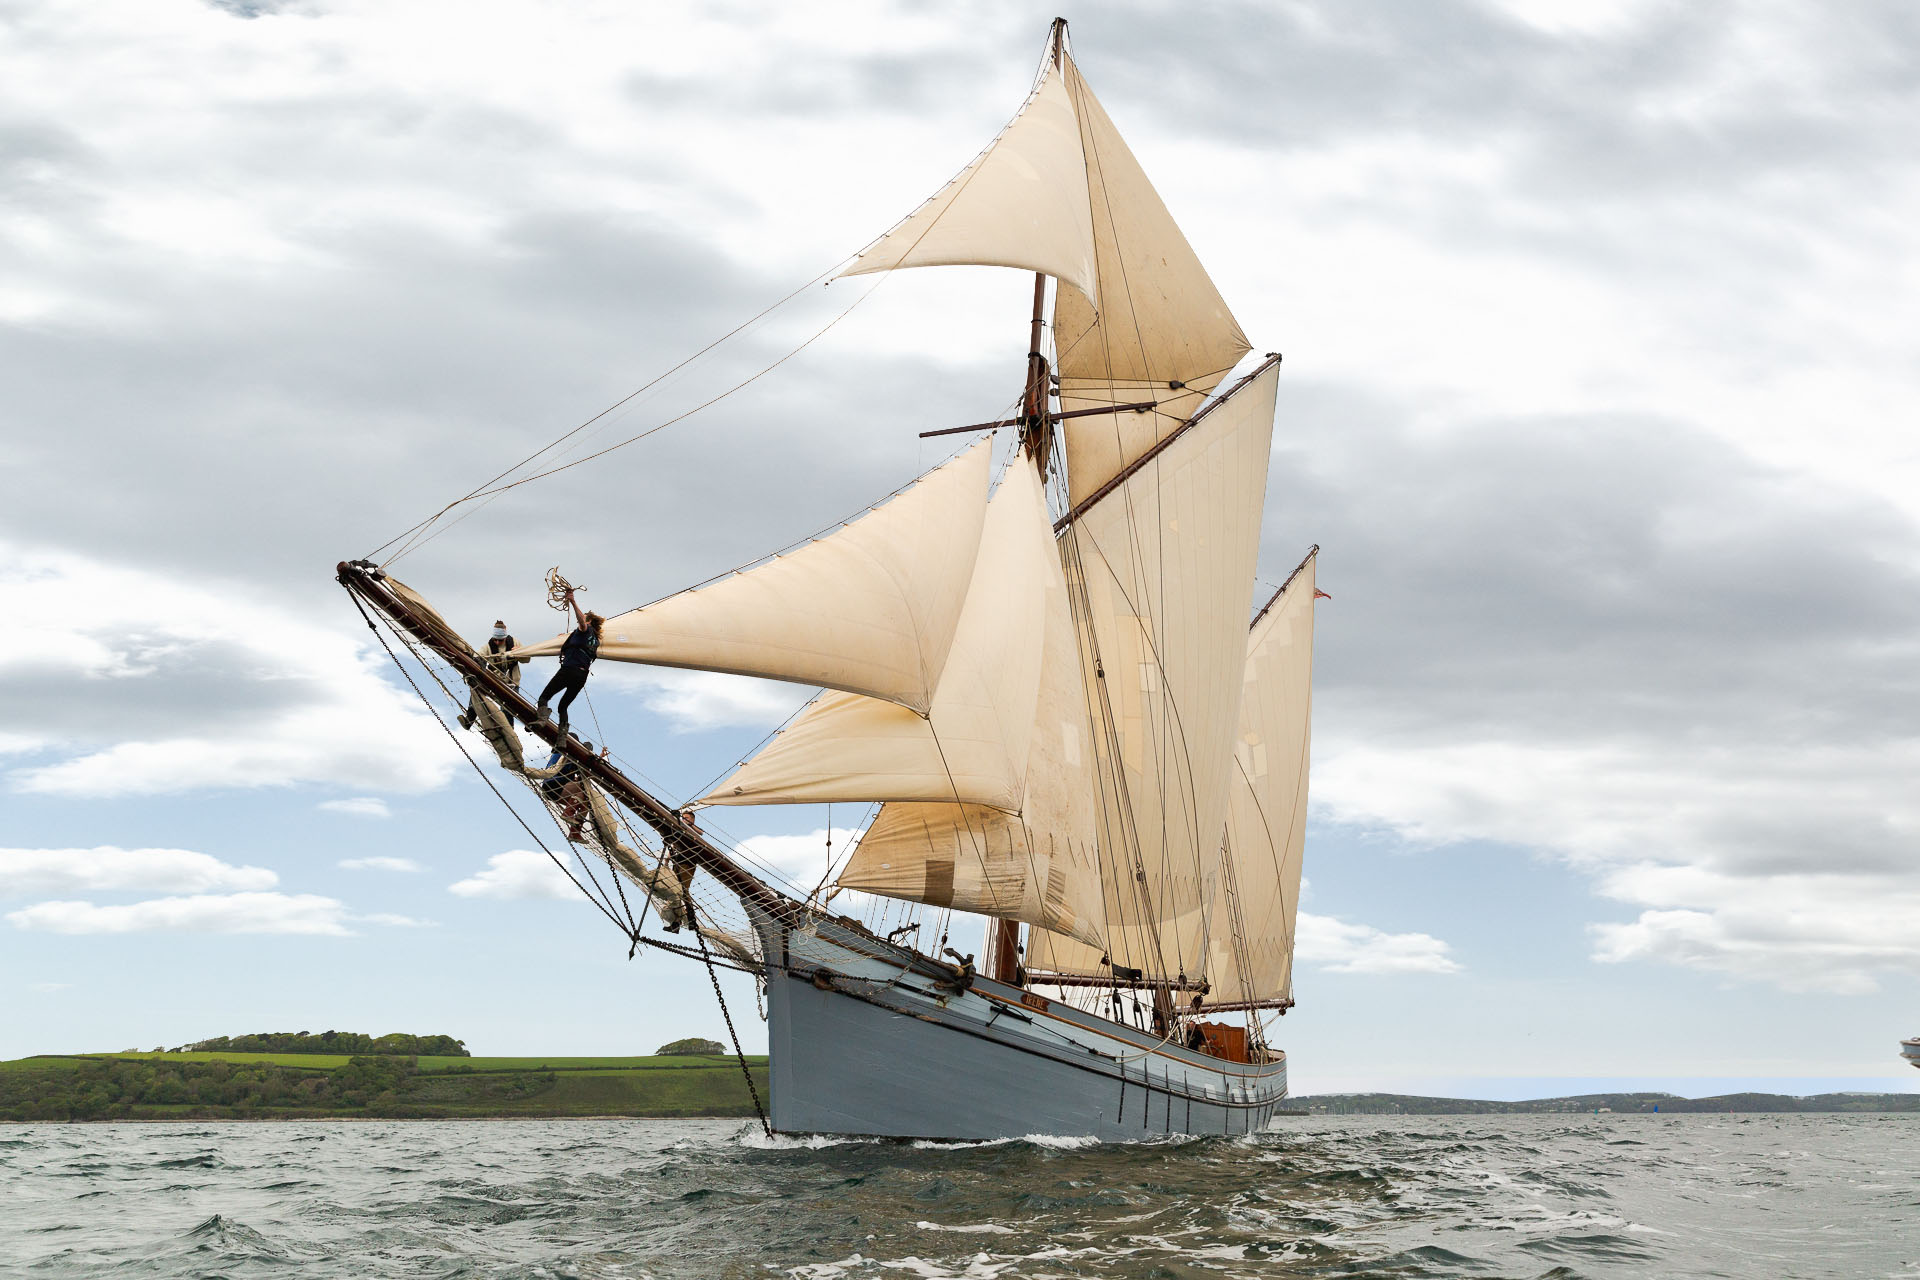 Irene bowsprit sailing